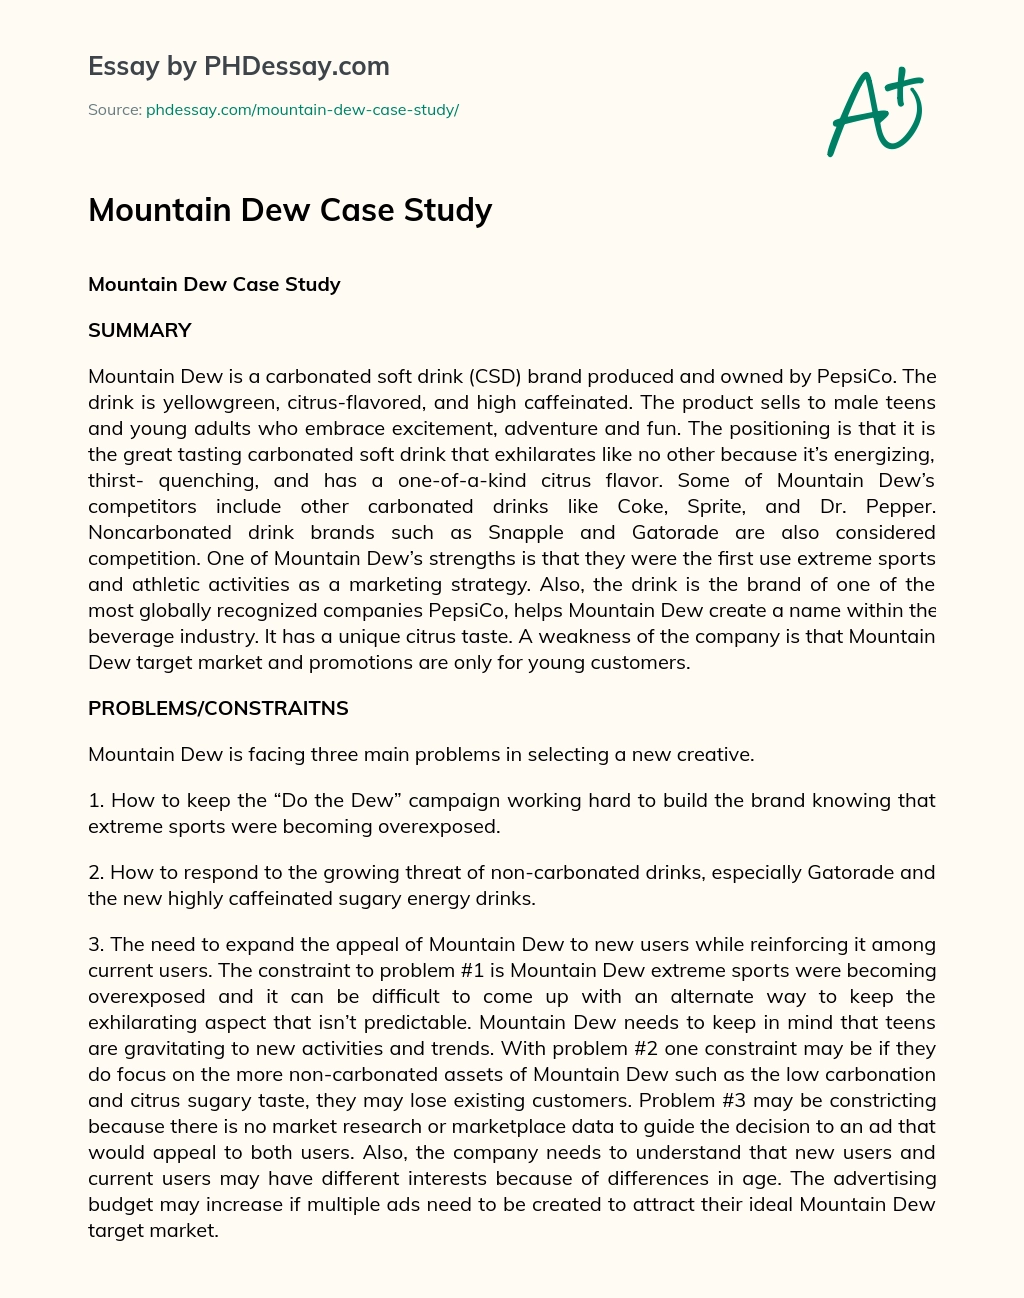 Mountain Dew Case Study essay